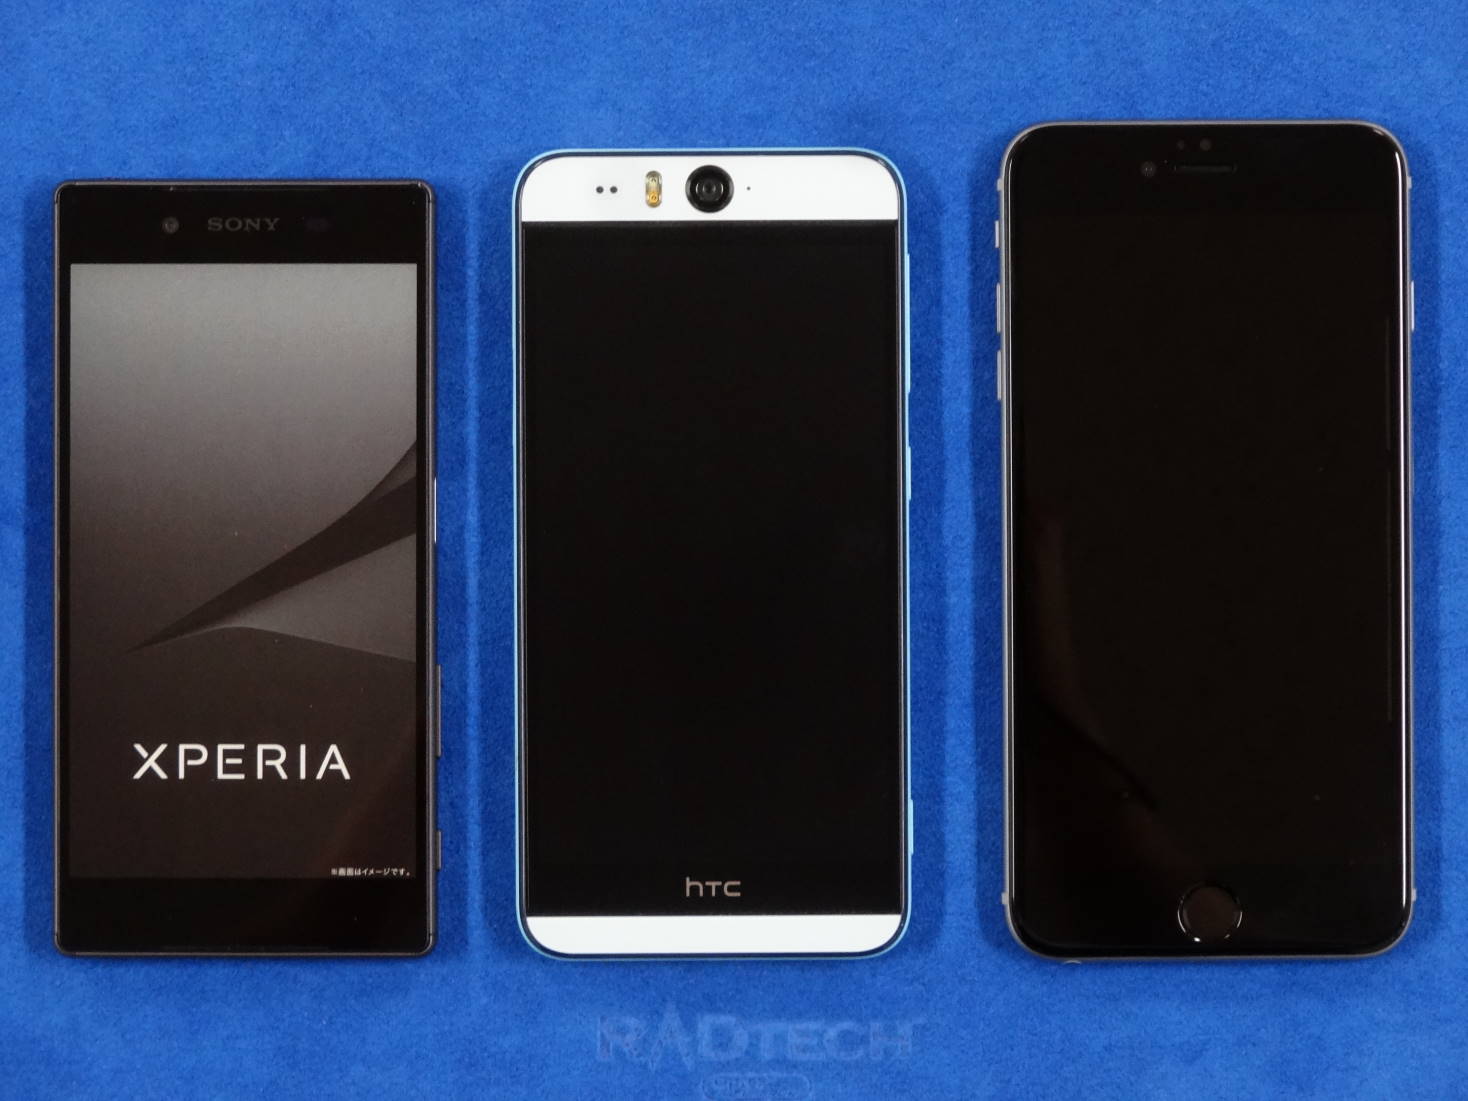 Xperia Z5 と HTC Desire EYE  と iPhone 6 Plus